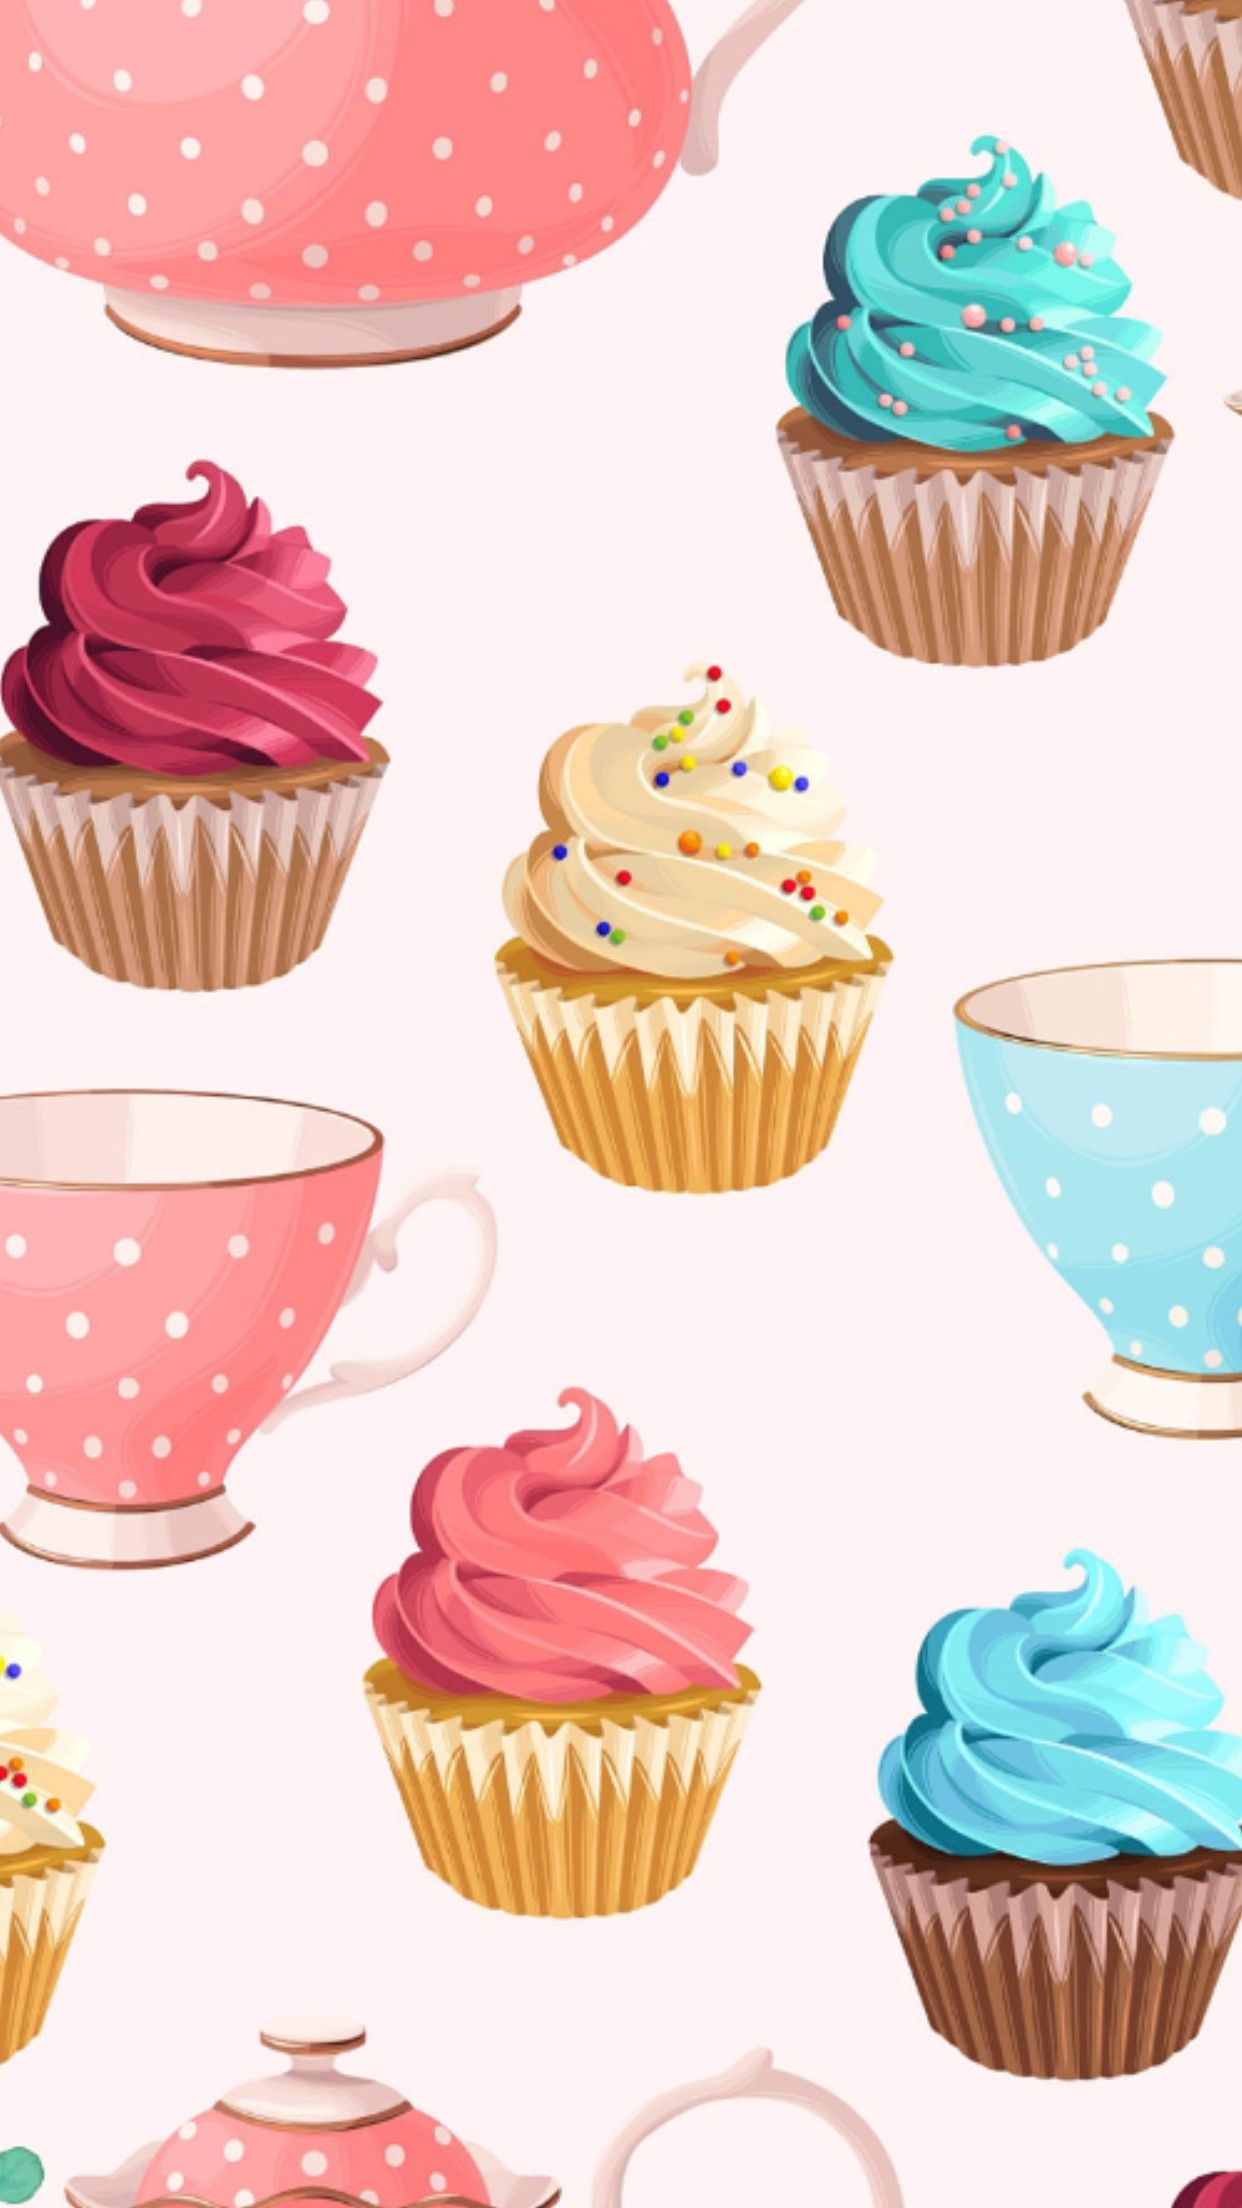 IPhone wallpaper cupcakes, teacups, and teapots - Cupcakes